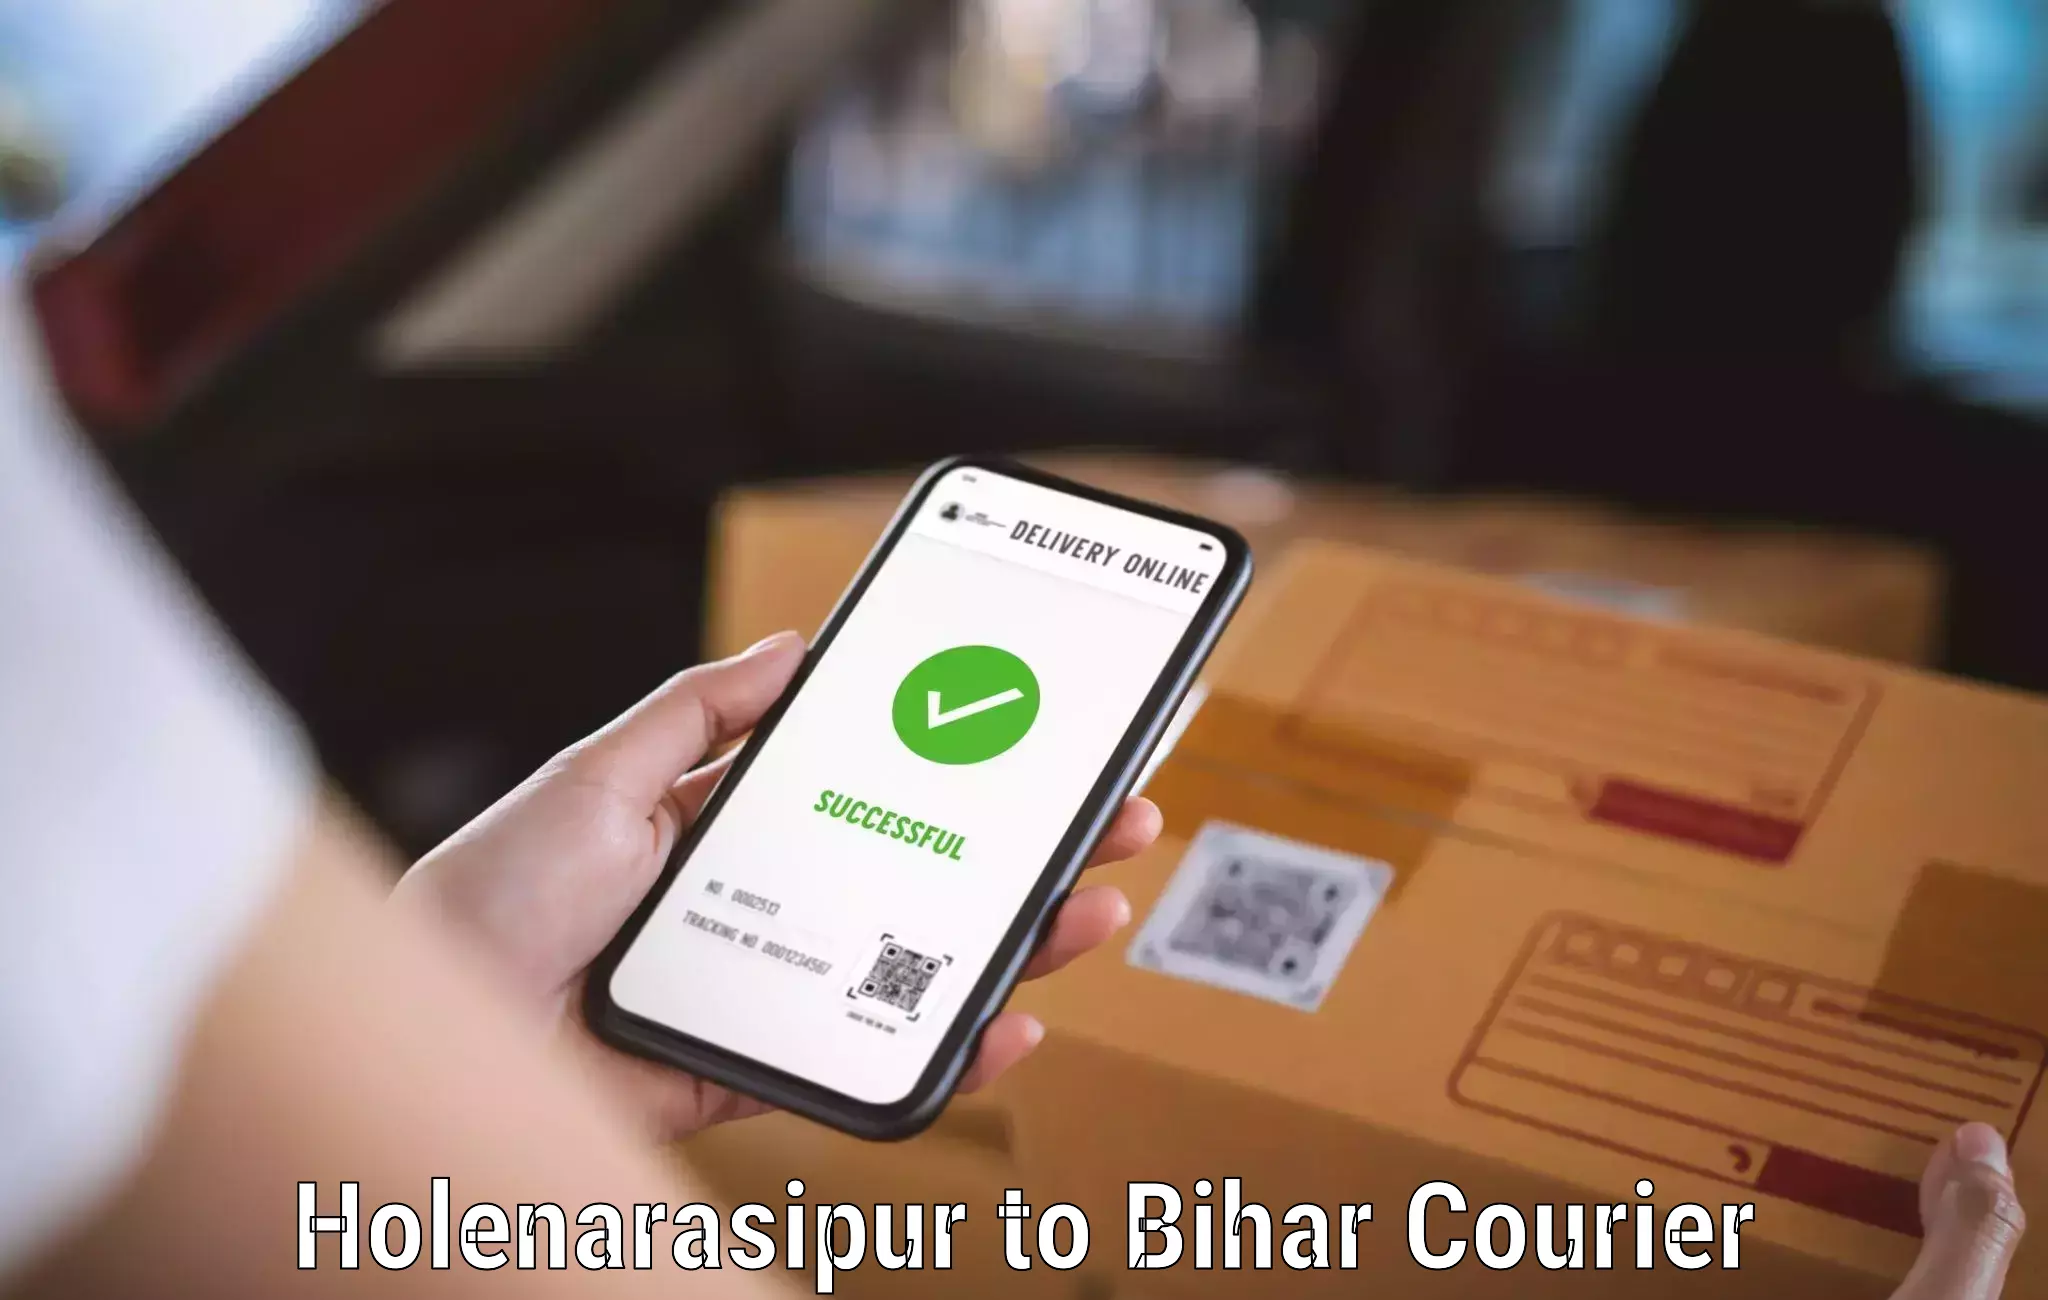 Courier service partnerships Holenarasipur to Sultanganj